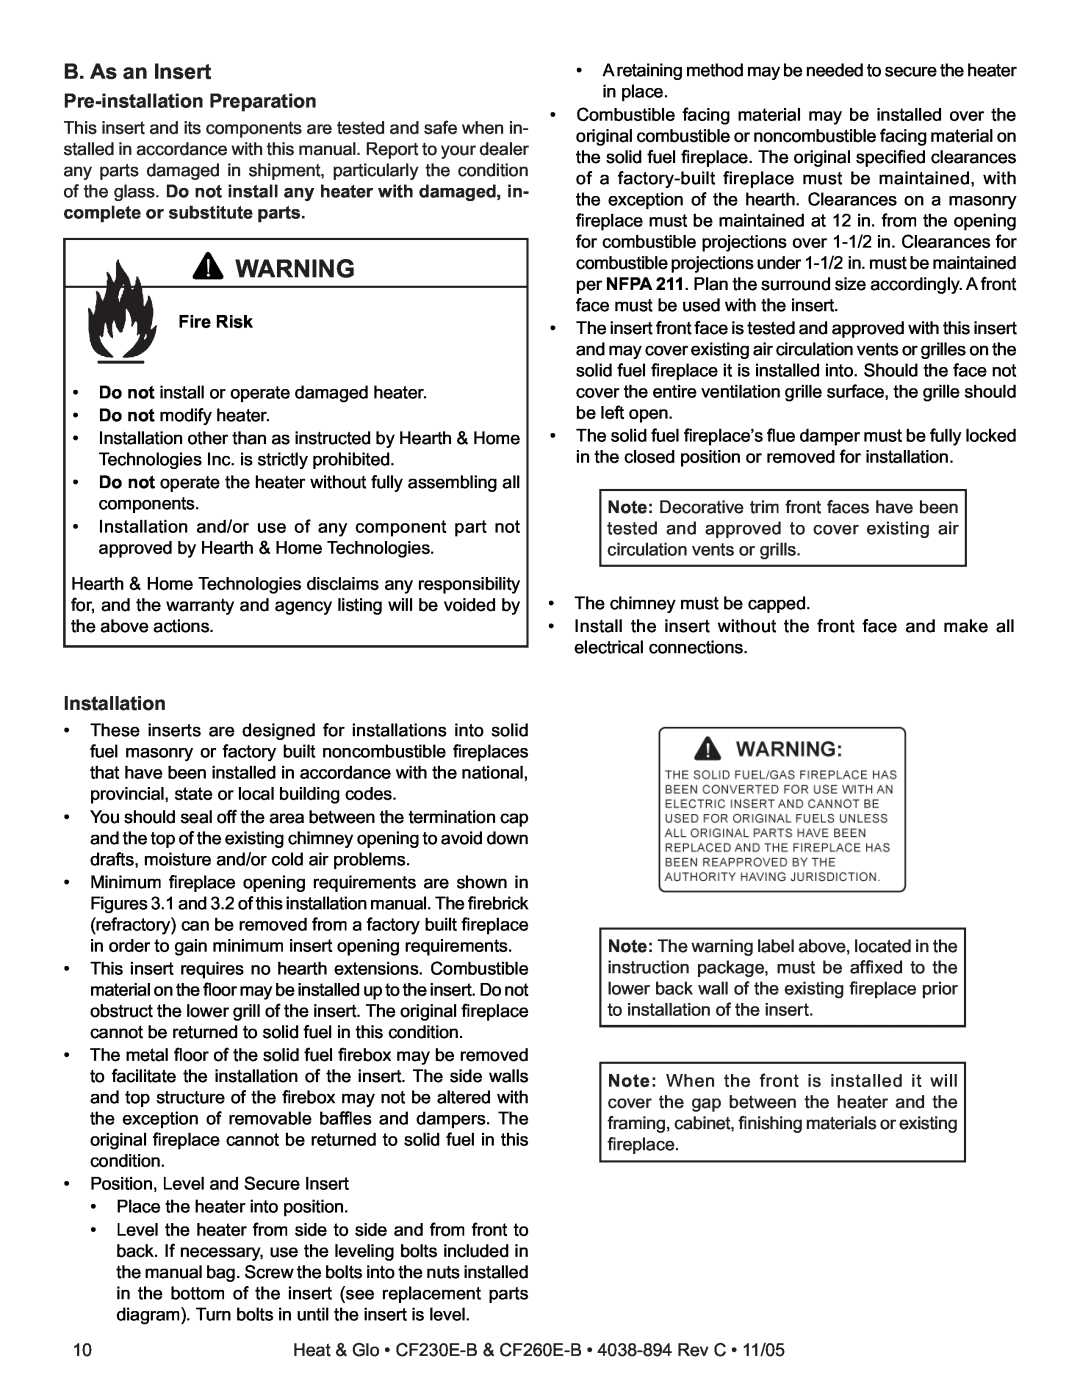 Heat & Glo LifeStyle CF230E-B, CF260E-B owner manual B. As an Insert, Pre-installationPreparation, Installation, Fire Risk 